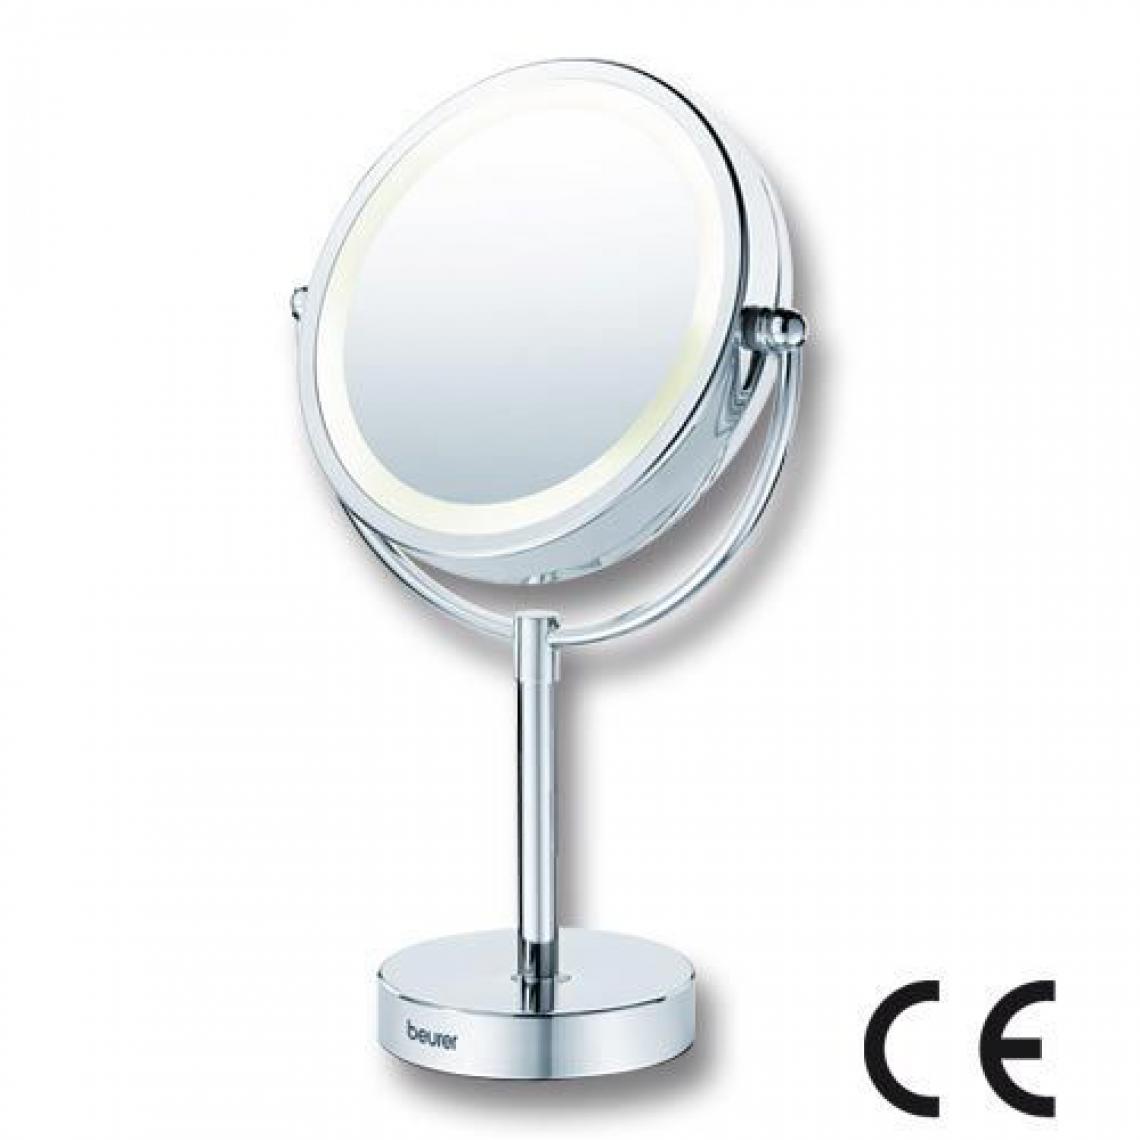 Icaverne - MIROIR BS69 Miroir lumineux - Chrome - Miroir de salle de bain